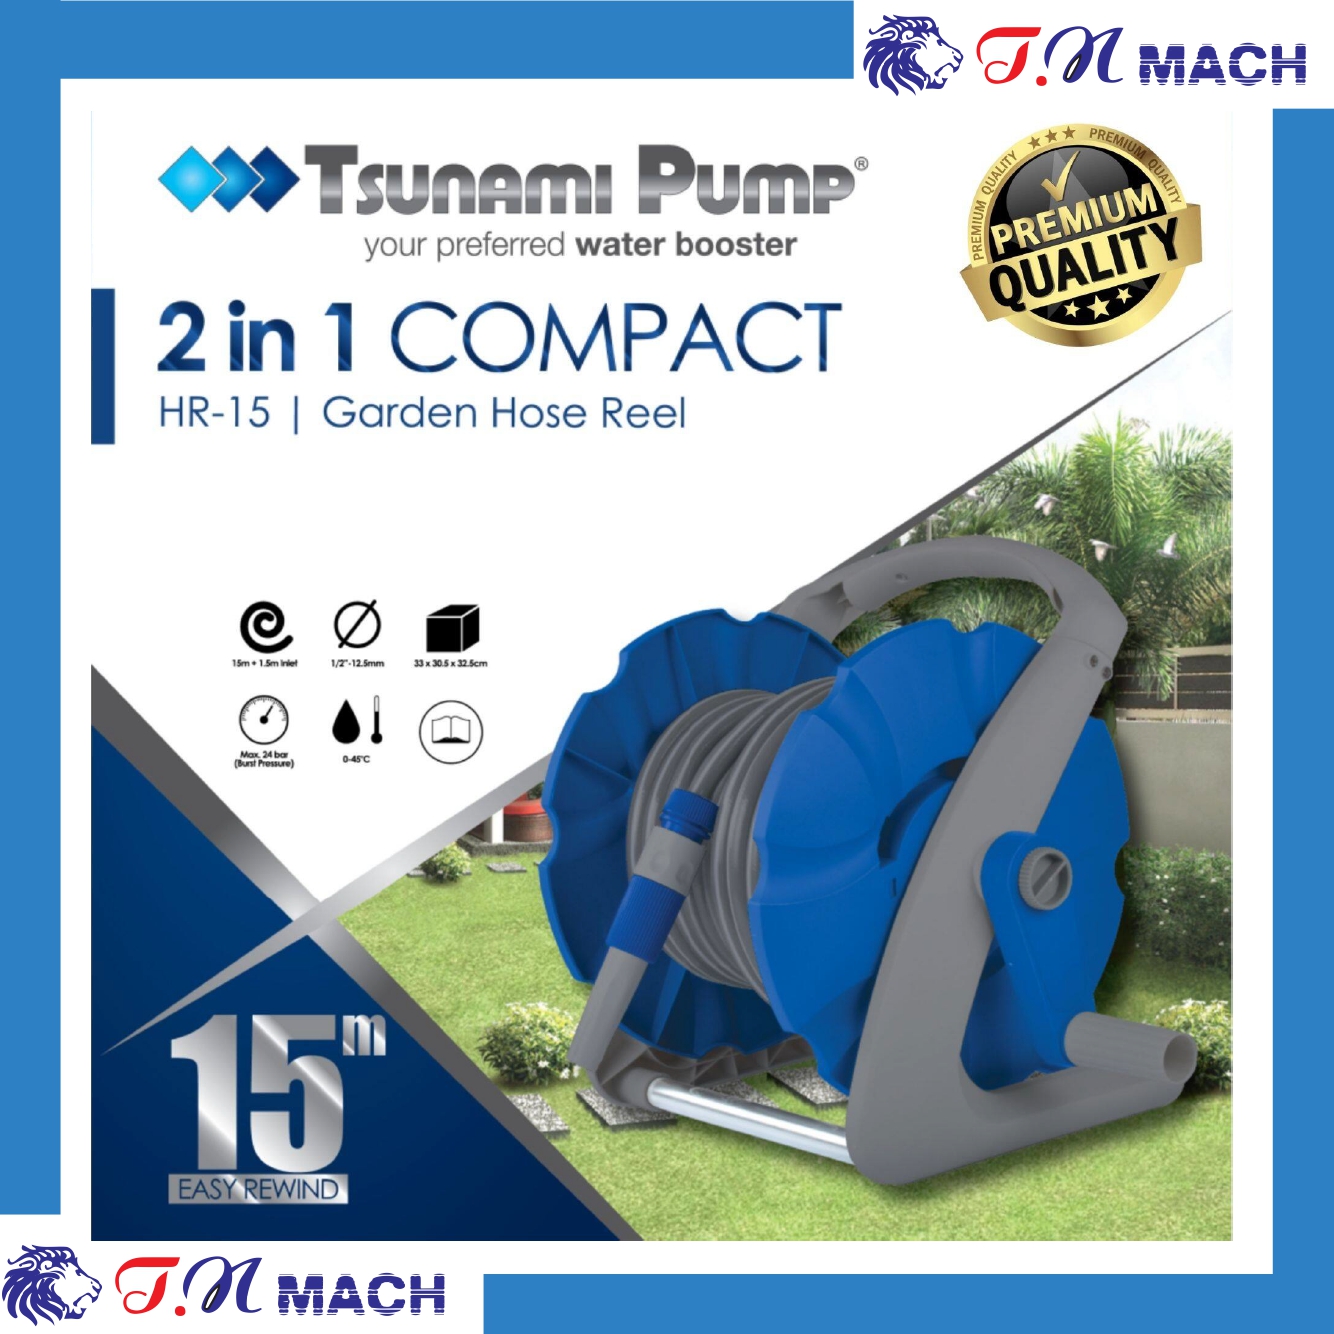 Tsunami Pump 2IN1 Compact 15m Garden Hose Reel HR-15